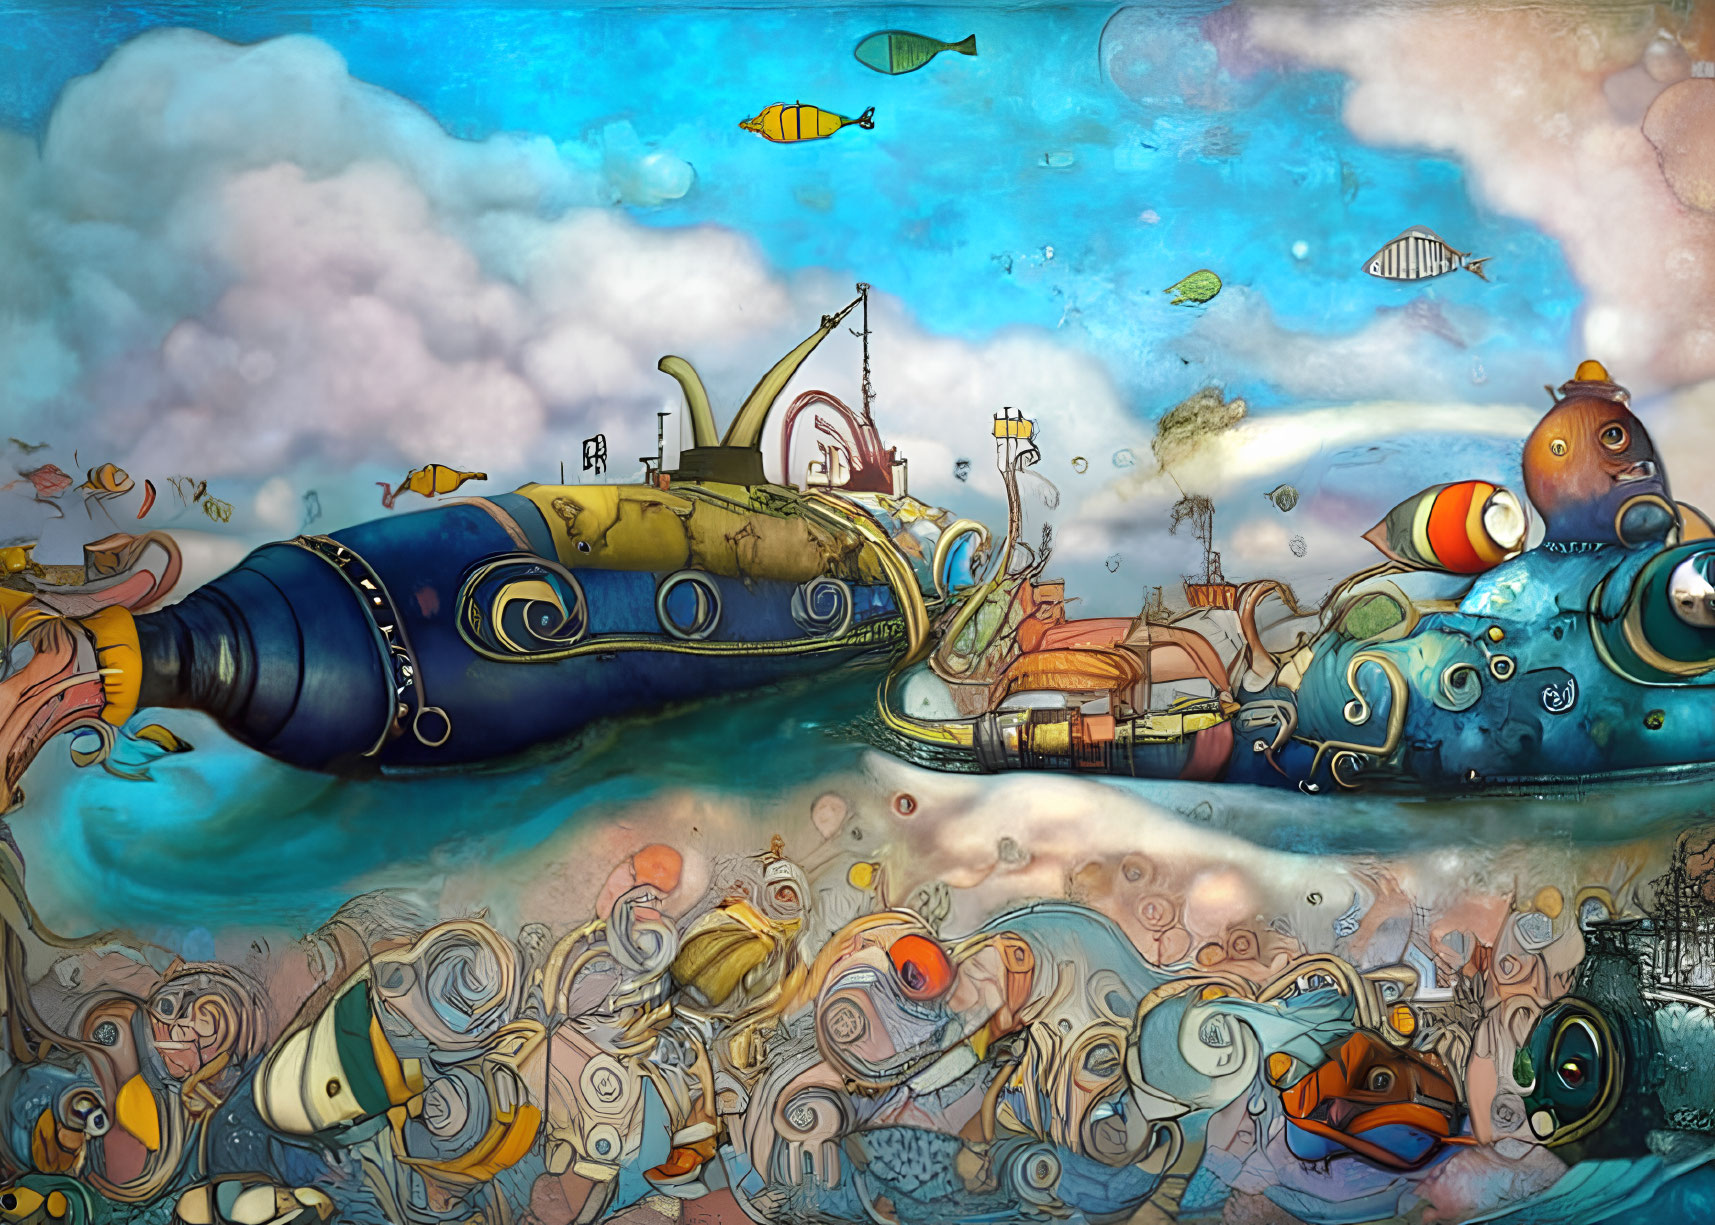 Vibrant underwater scene with whimsical submarine and stylized marine life